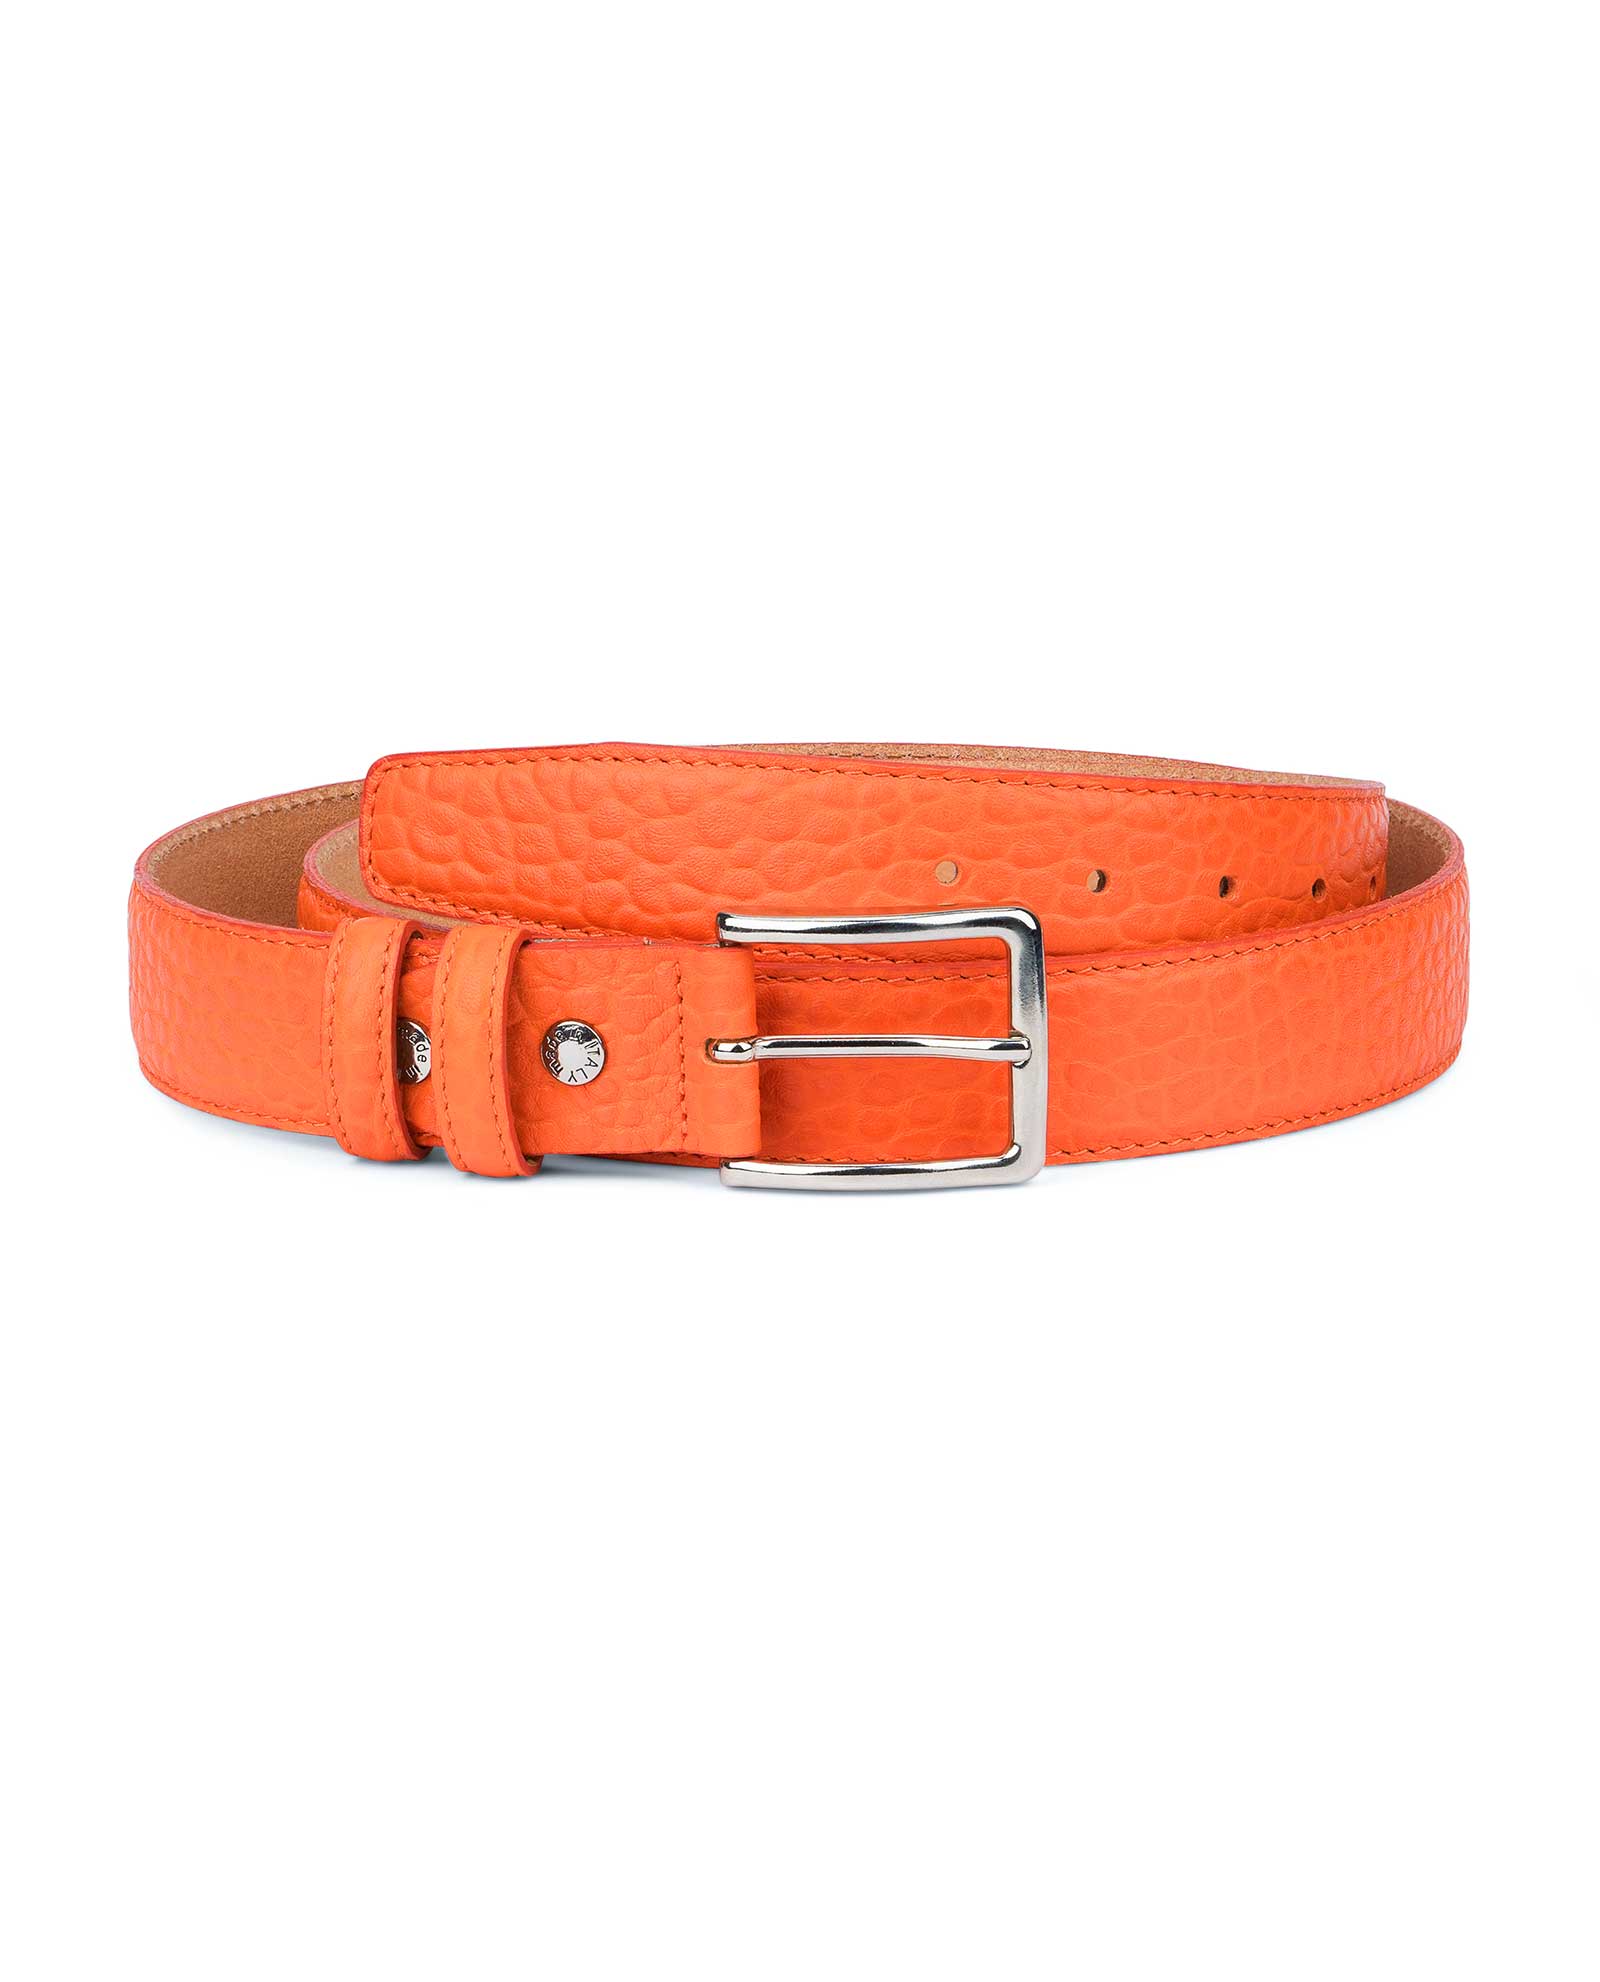 Buy Men's Orange Belt, Italian Leather